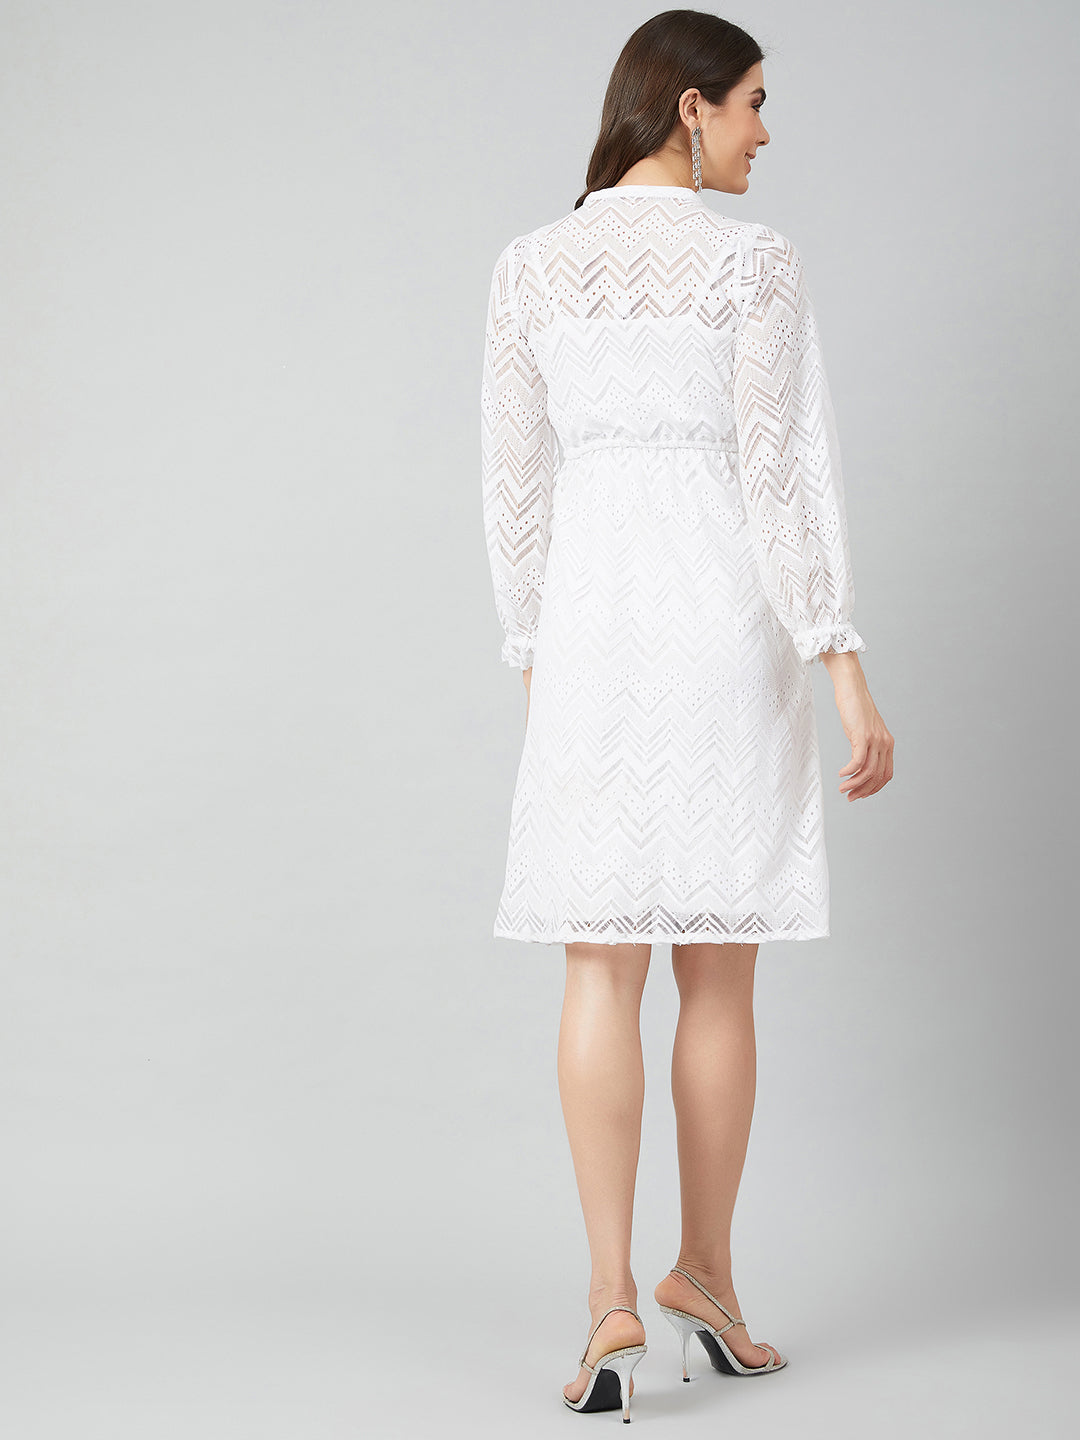 Athena Women White Self Design Fit and Flare Dress - Athena Lifestyle